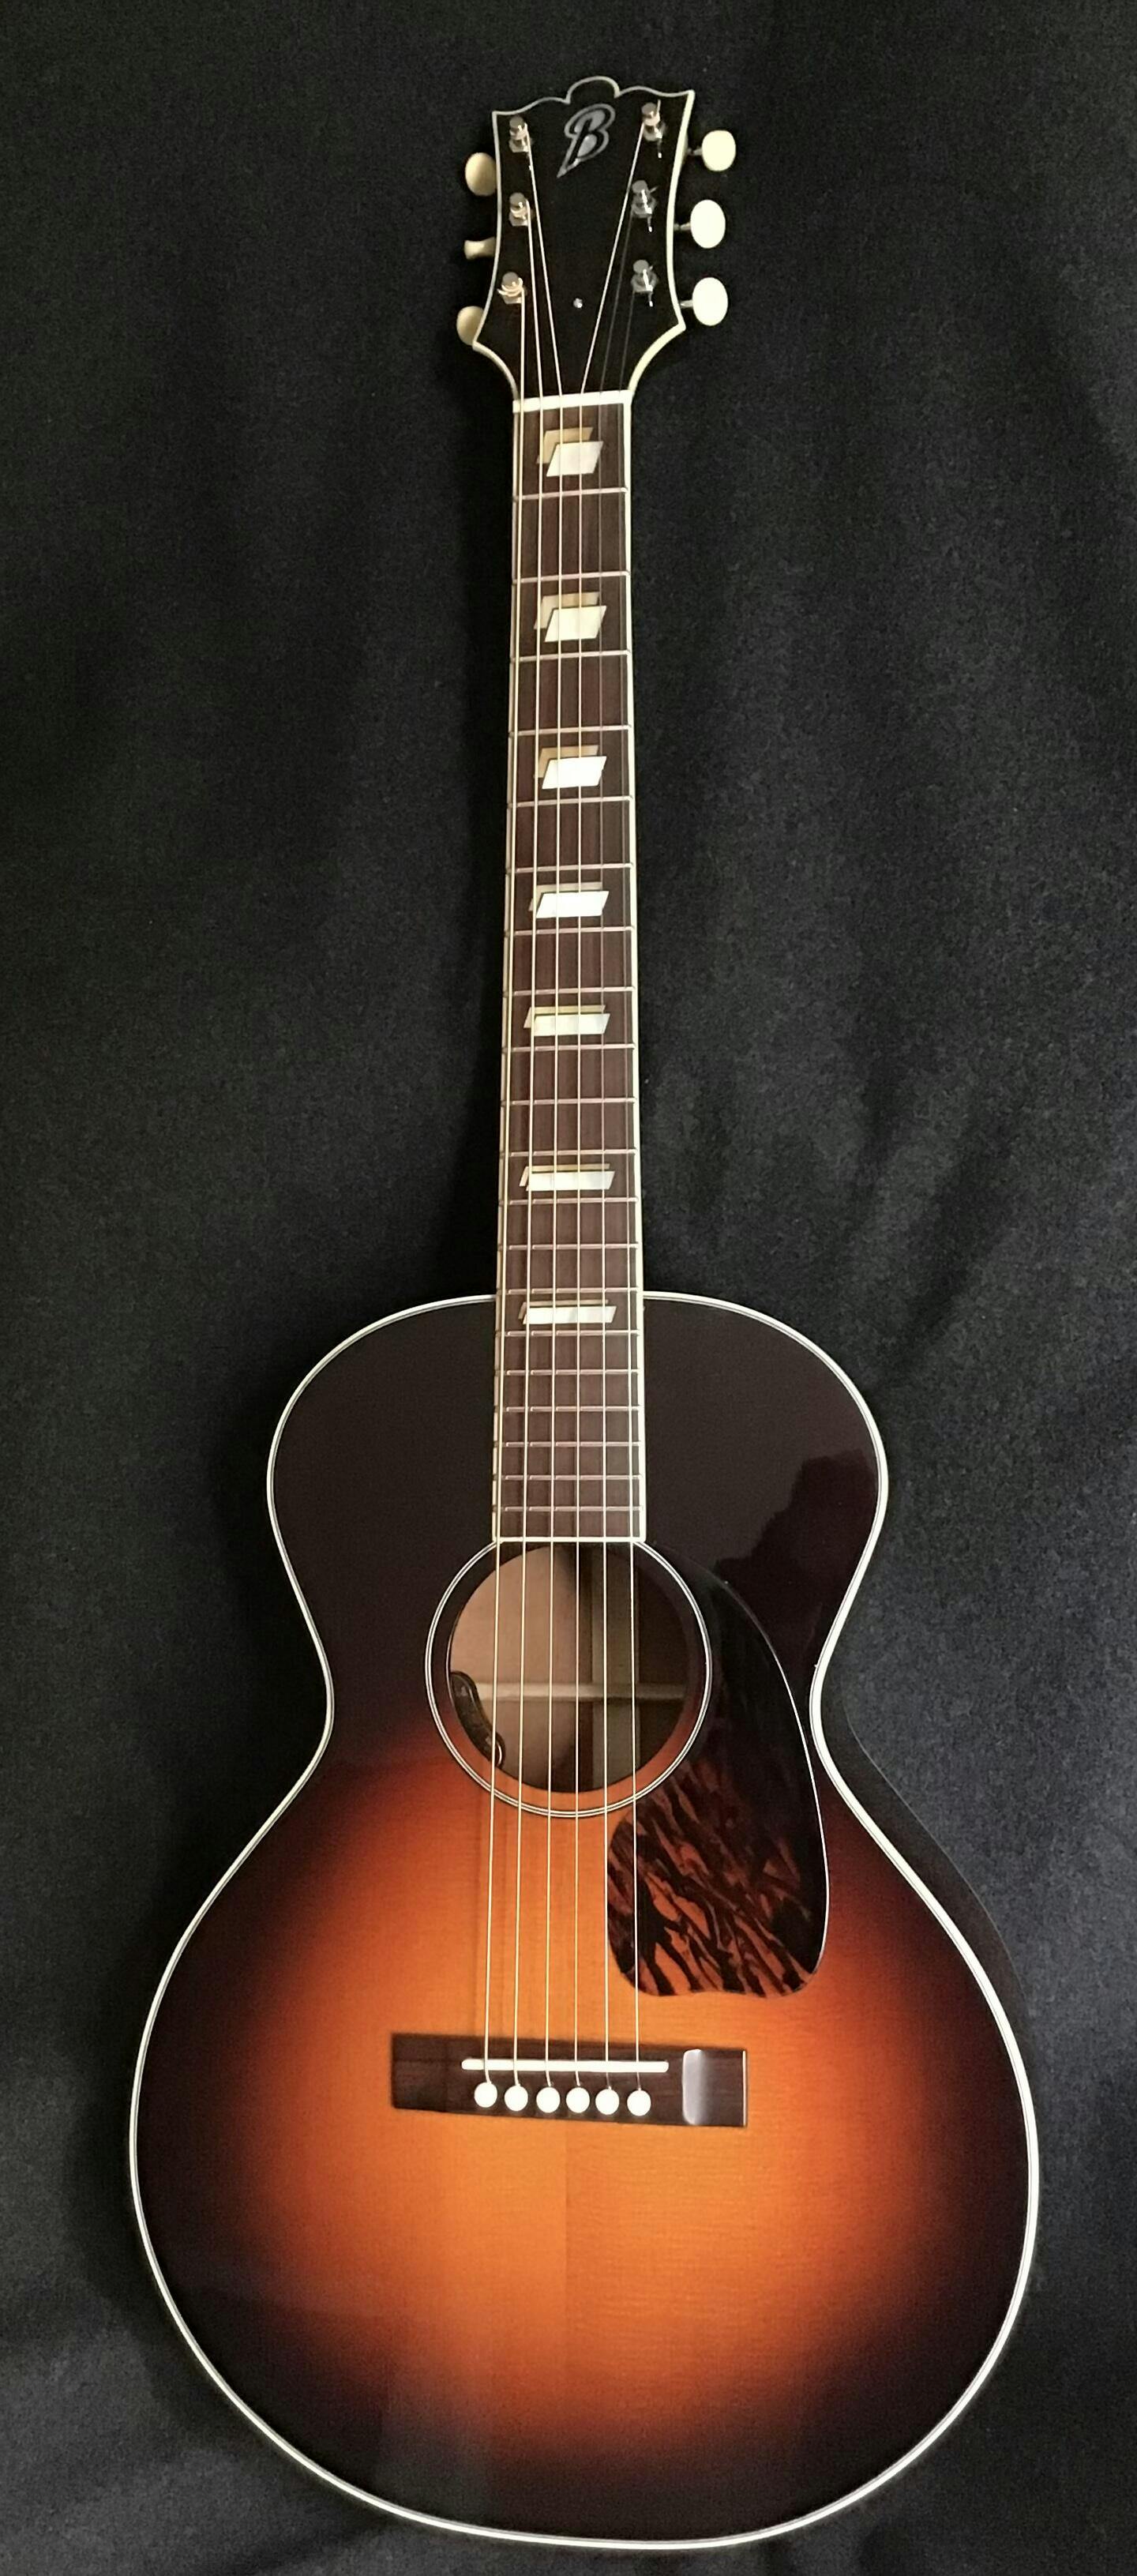 John Pearse Phosphor Bronze Acoustic Guitar Strings 700M Medium 13-56